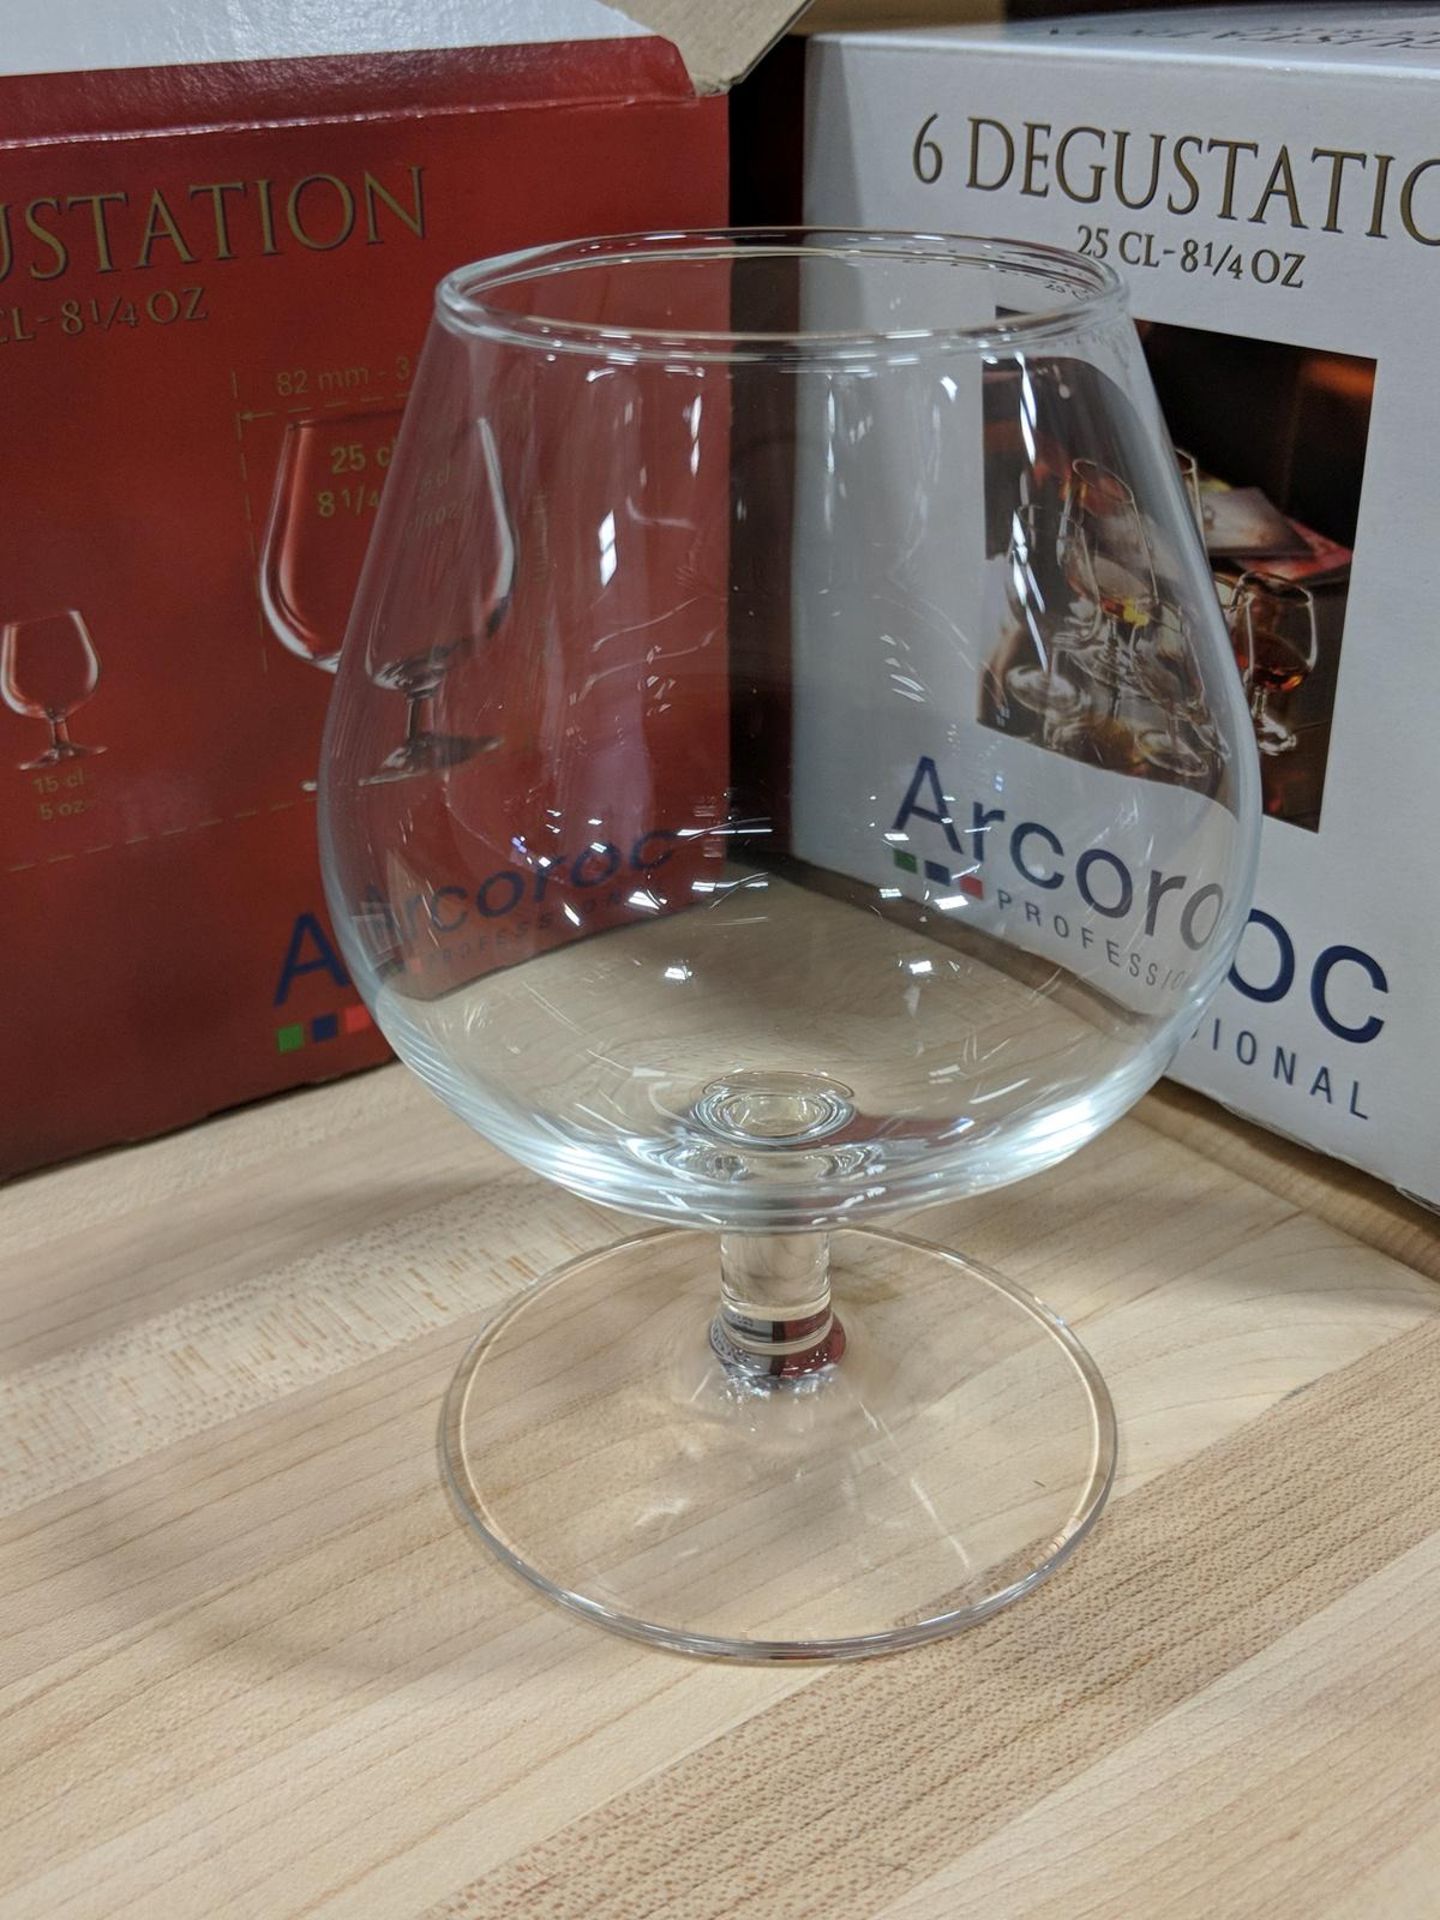 8.5oz/250ml Degustation Brandy/Cognac Glasses - Lot of 24 (1 Case/4 Boxes), Arcoroc 62661 - Image 5 of 6